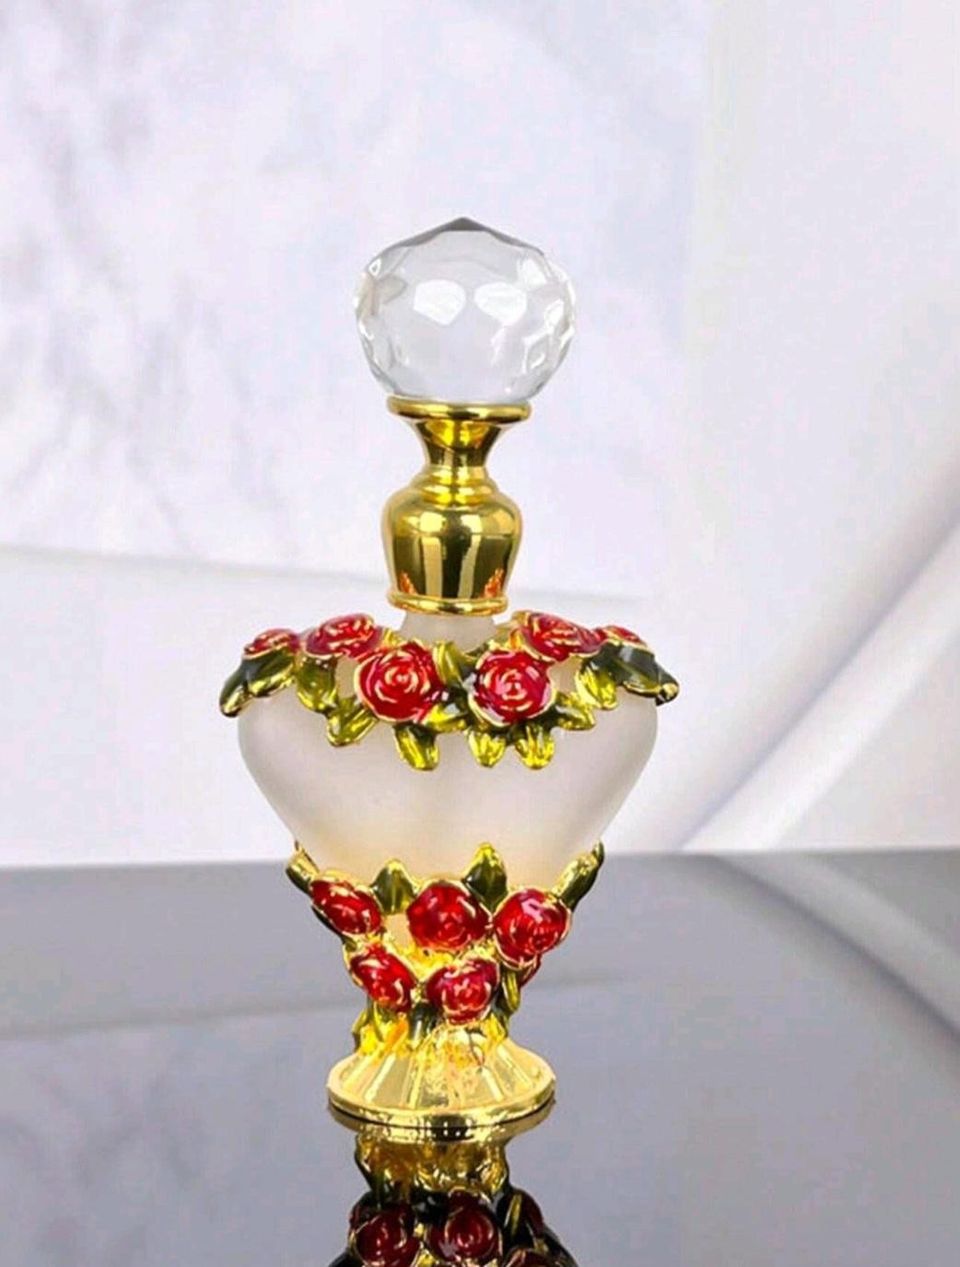 5ml Vintage Style Perfume Bottle